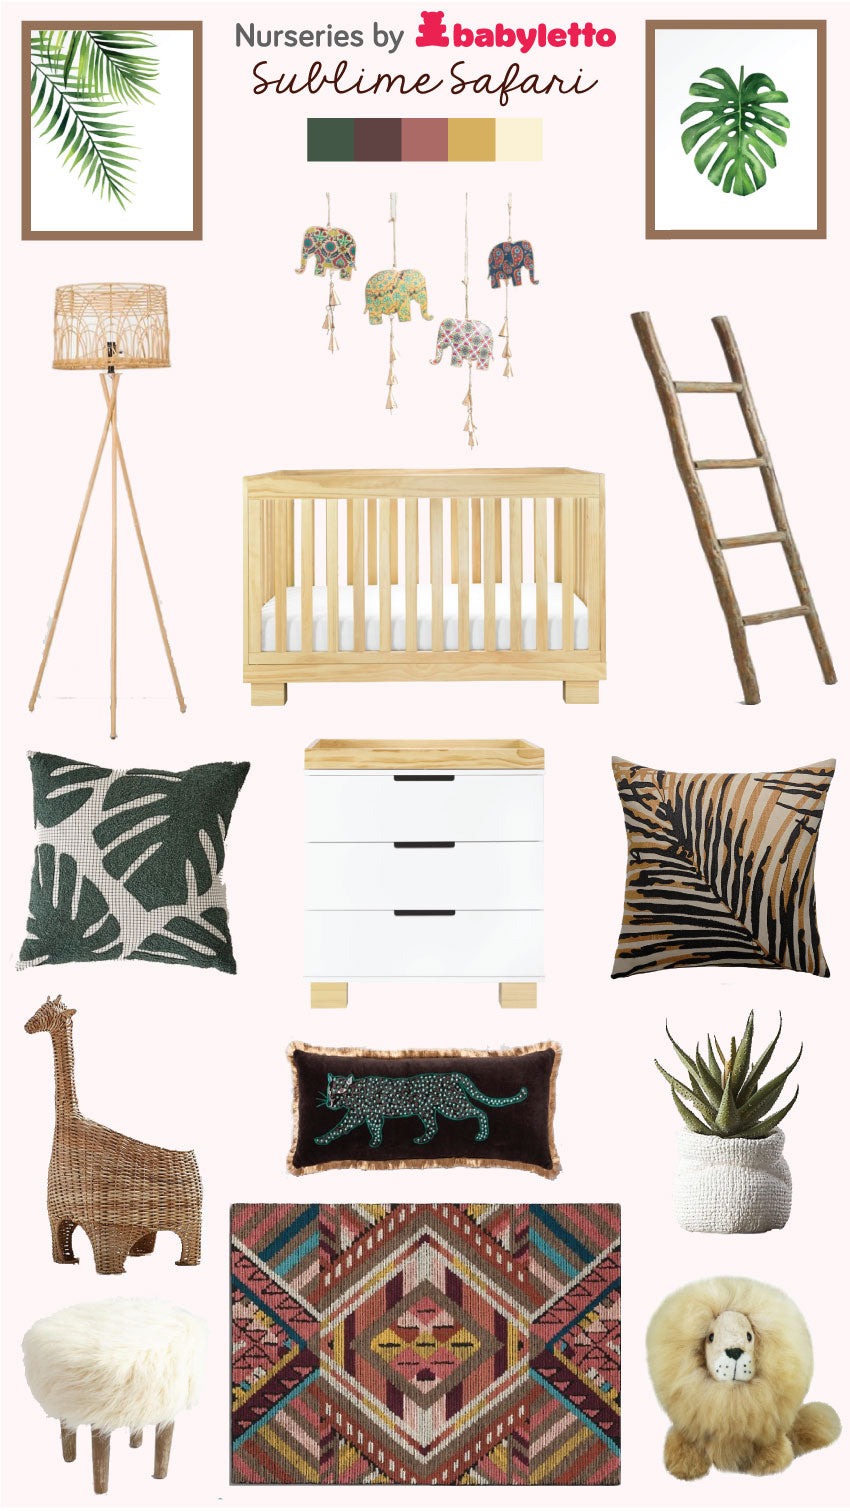 nursery styleboard babyletto sublime safari